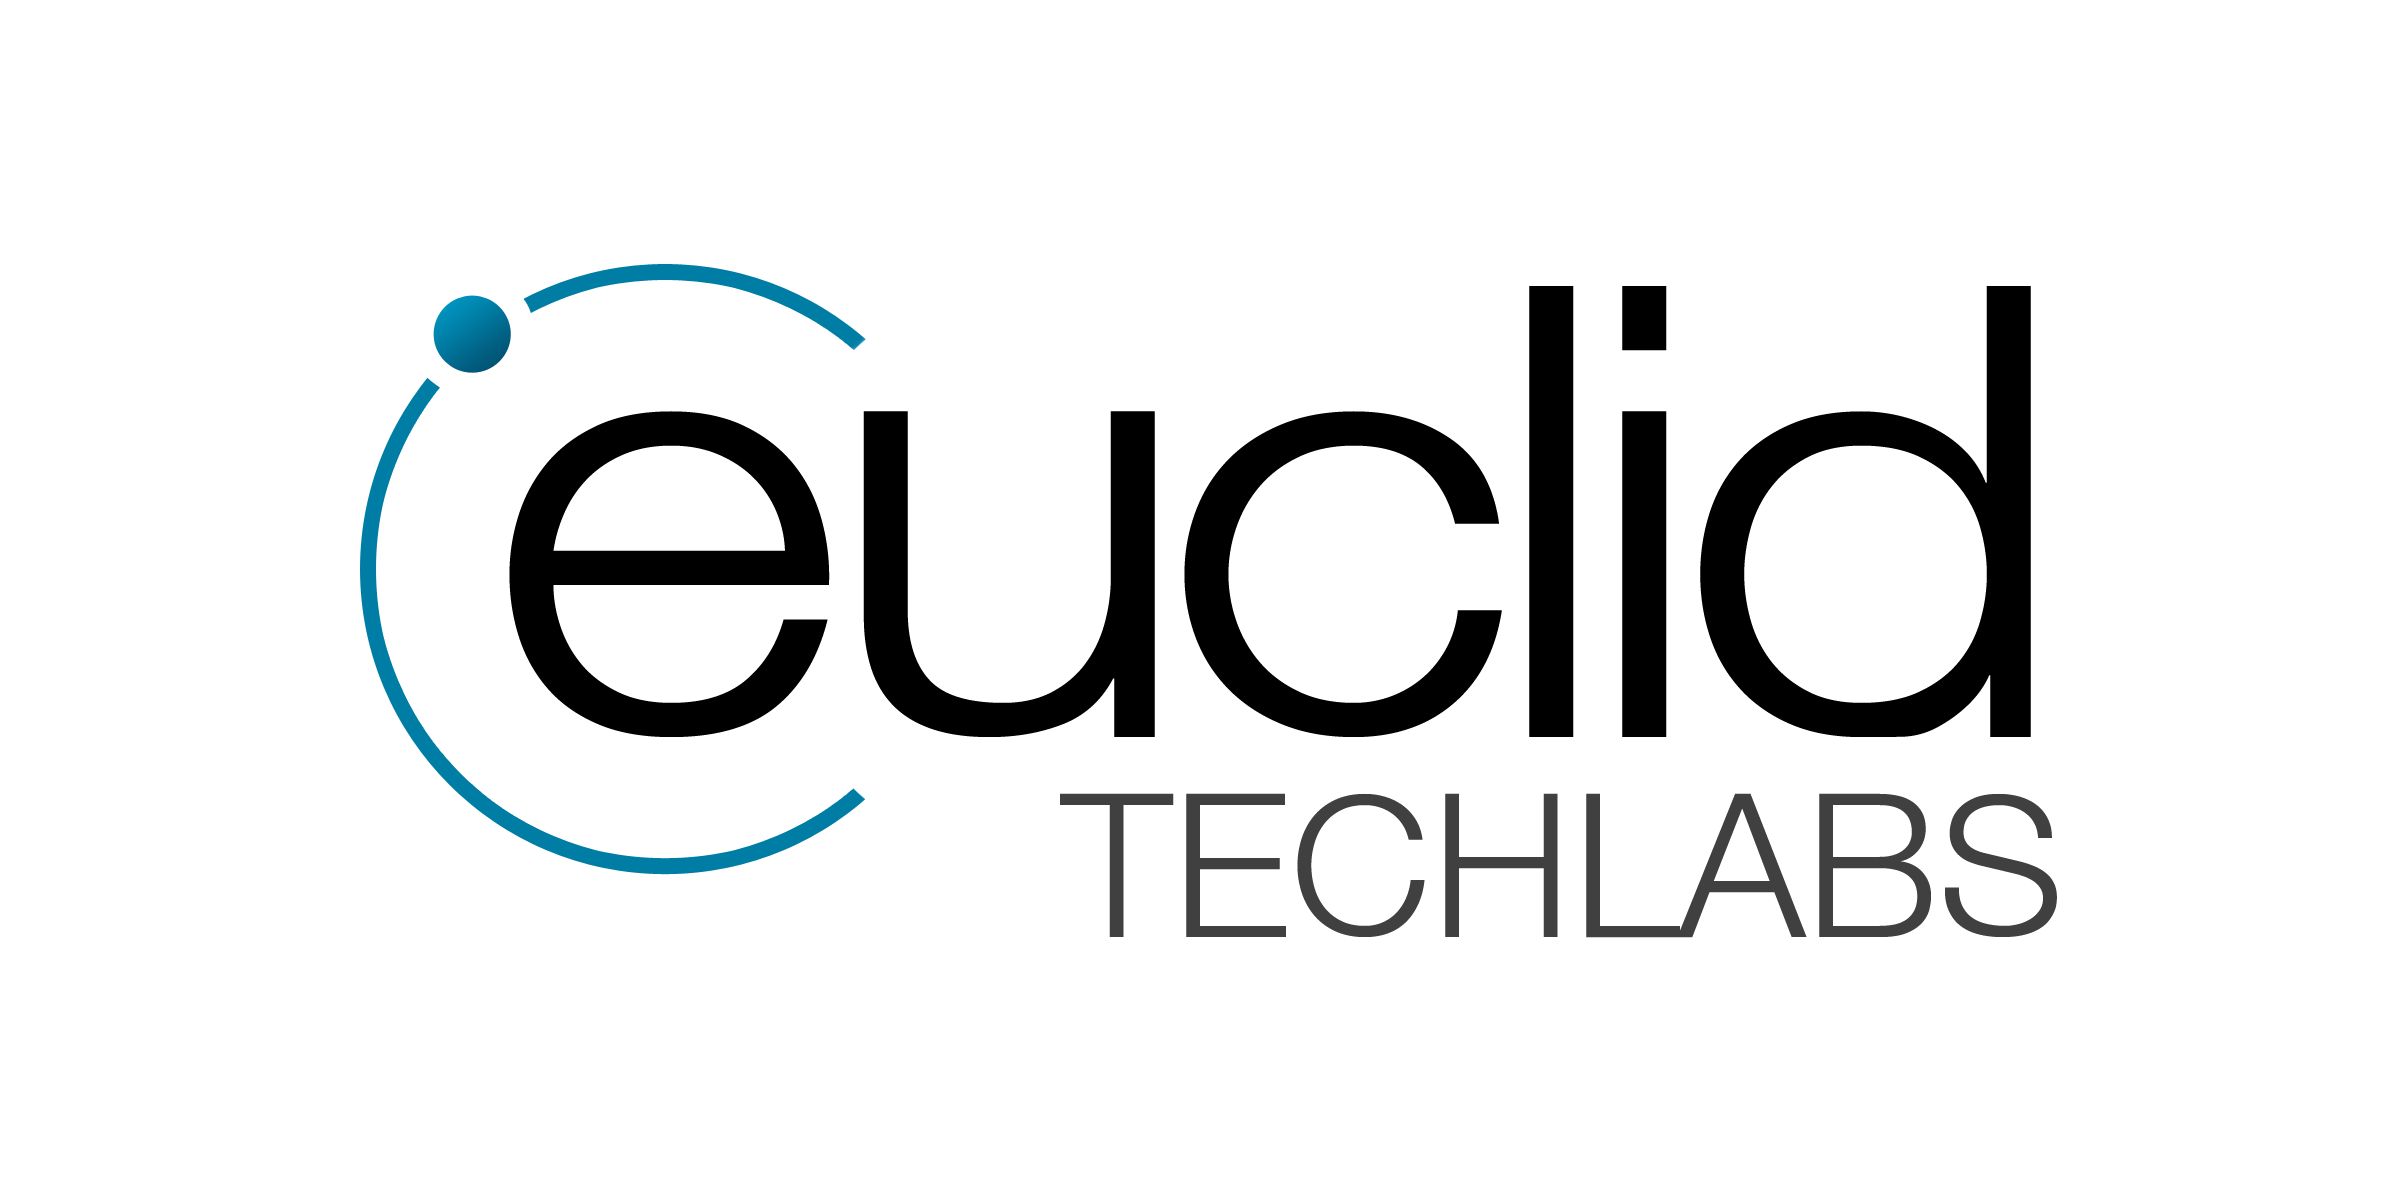 Euclid Techlabs